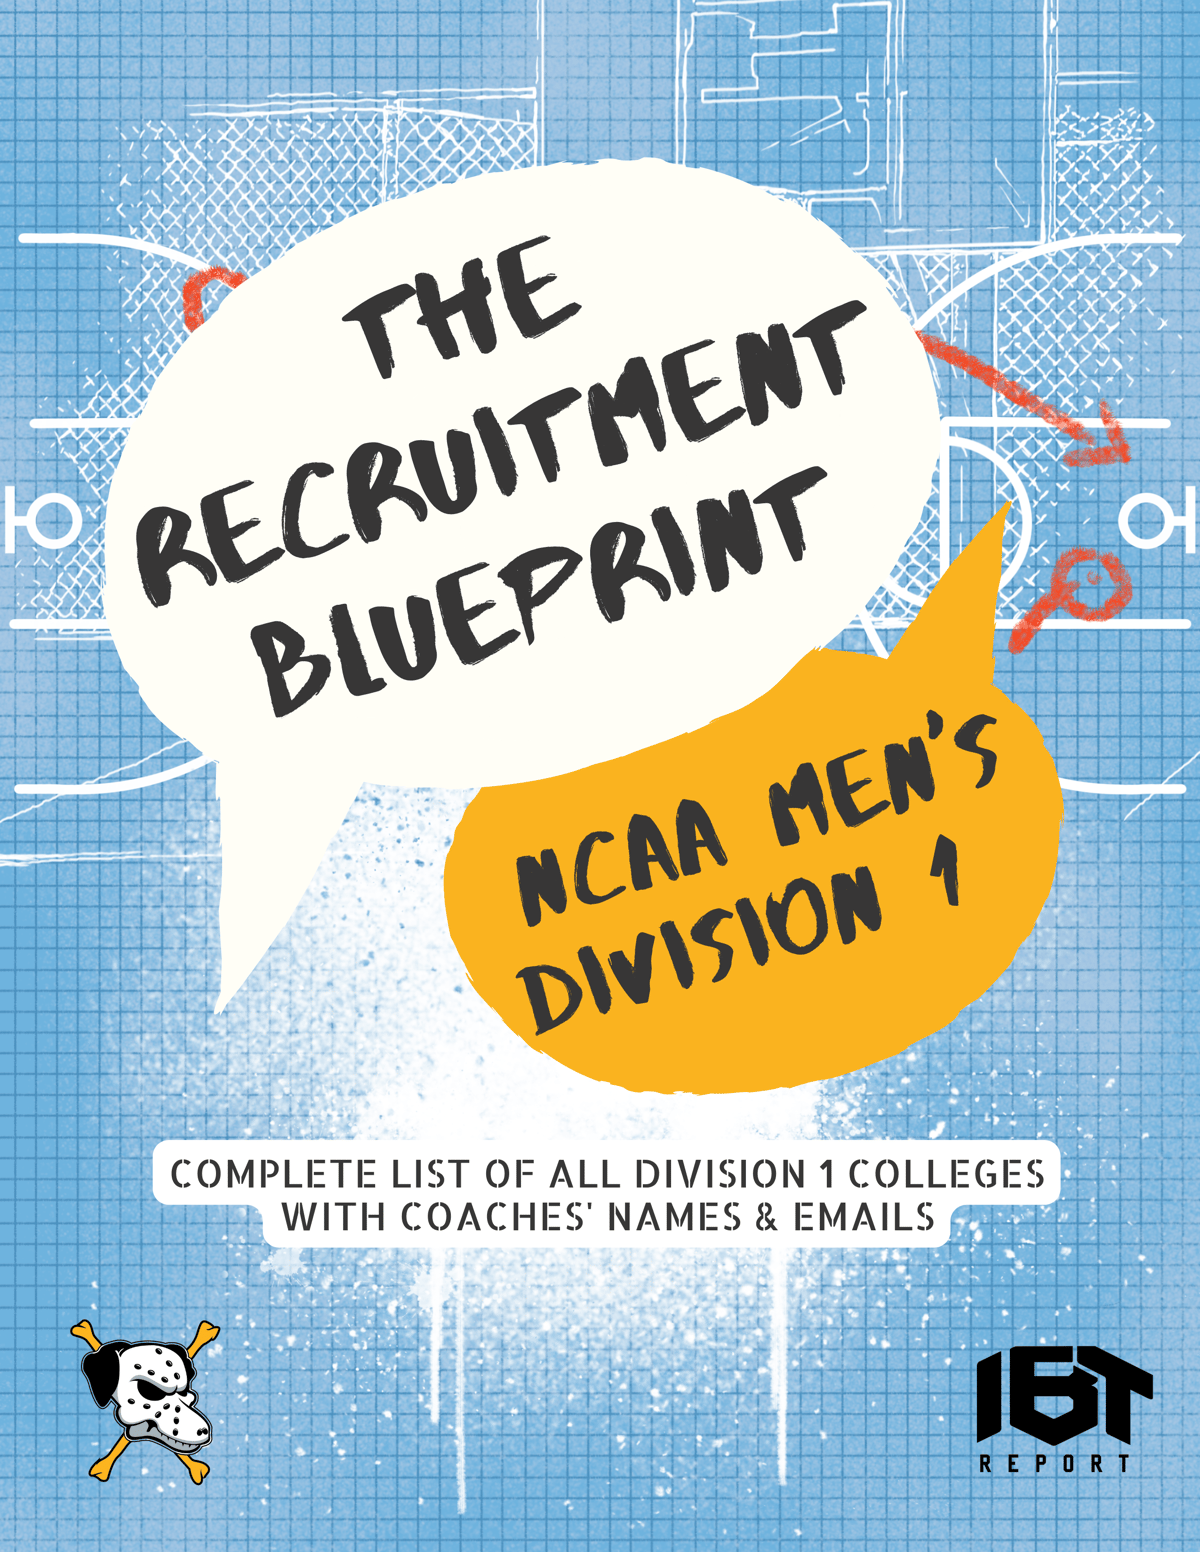 Image of The Recruitment Blueprint (Men's NCAA Division 1)